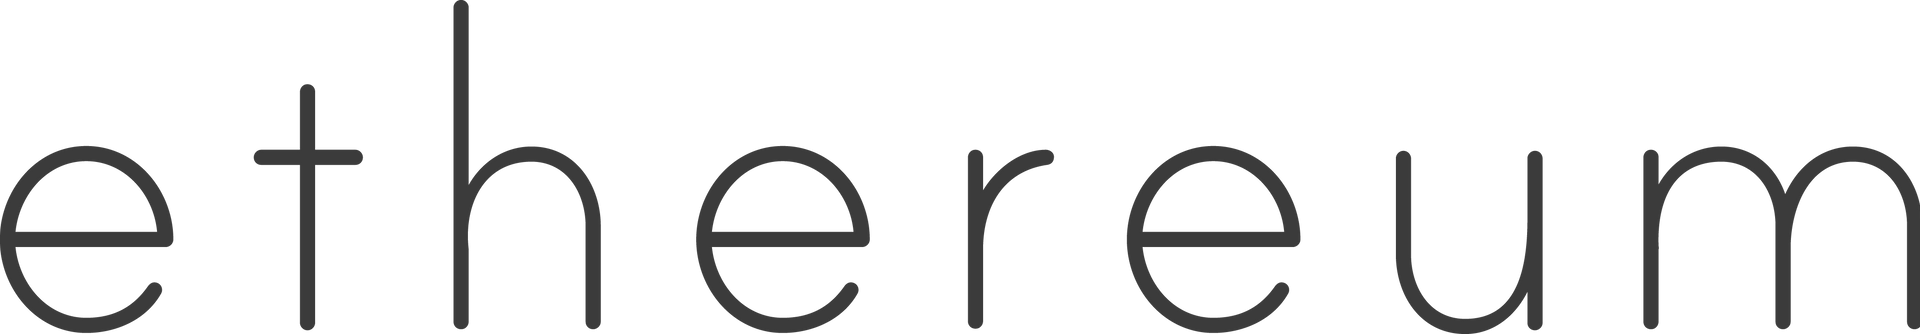 Mot-symbole ETH (grise)